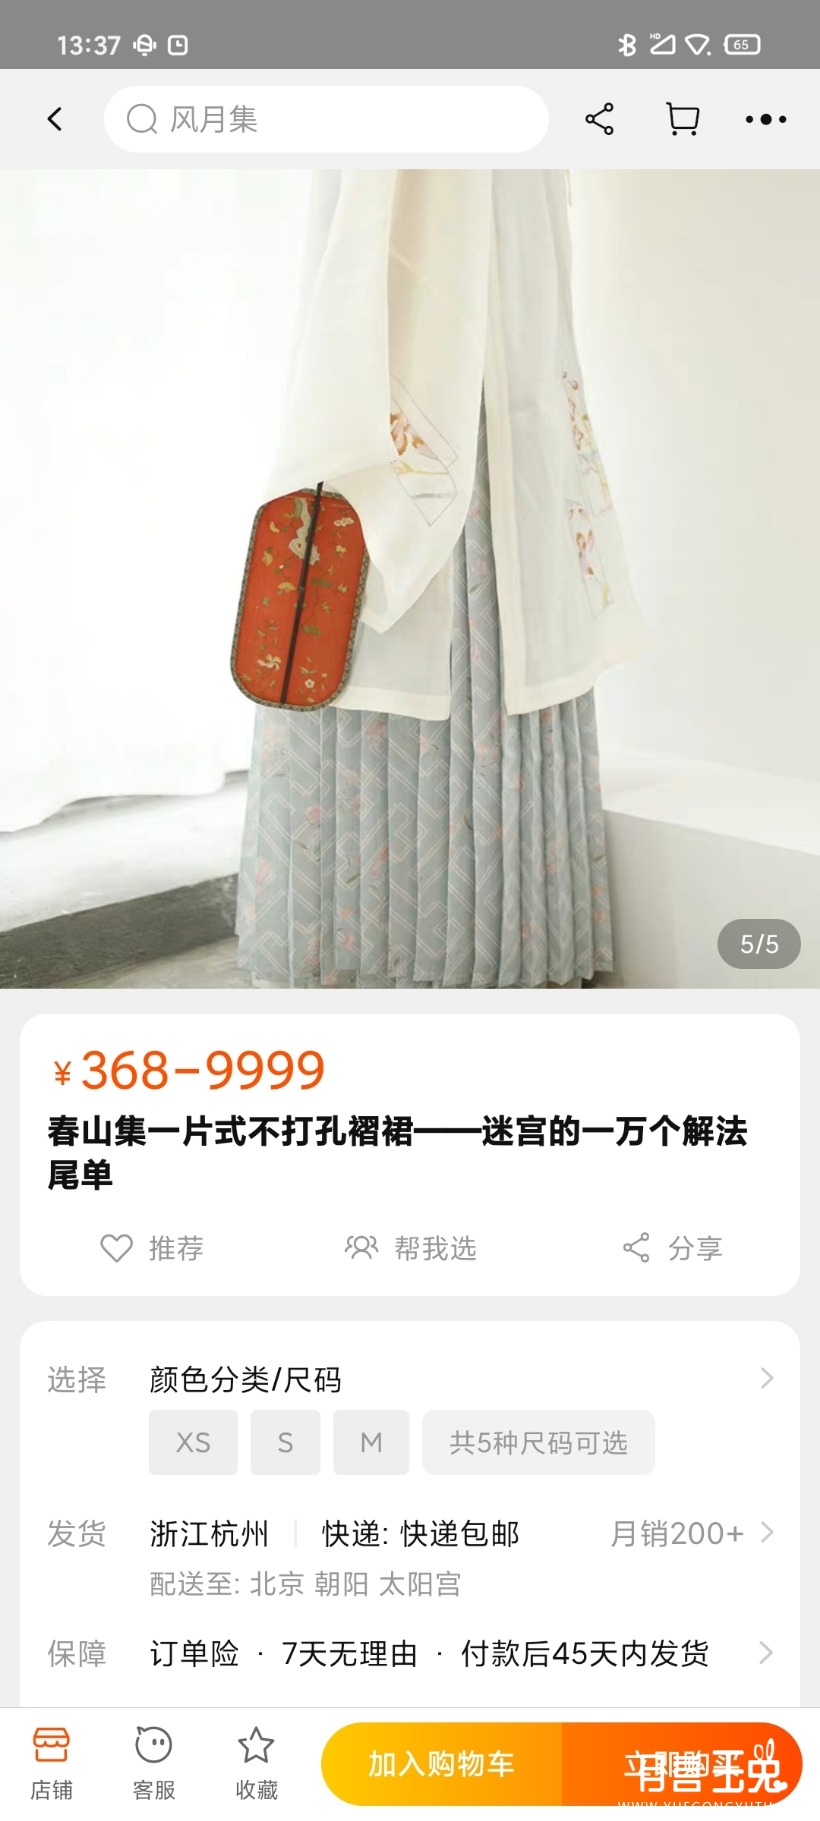 Screenshot_2021-03-31-13-37-48-714_com.taobao.taobao.jpg